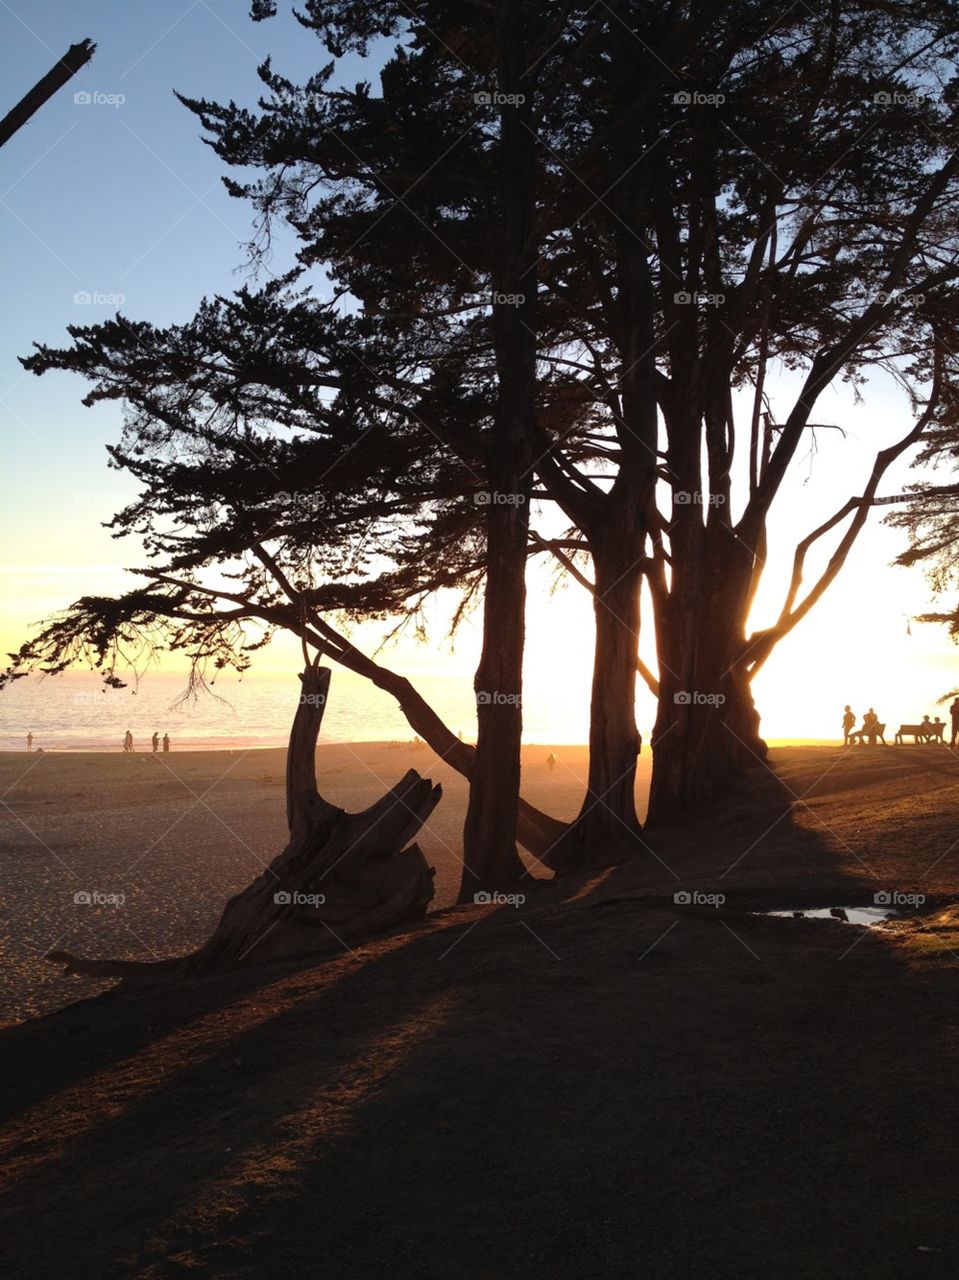 Golden hour at the beach in Santa Cruz, California 